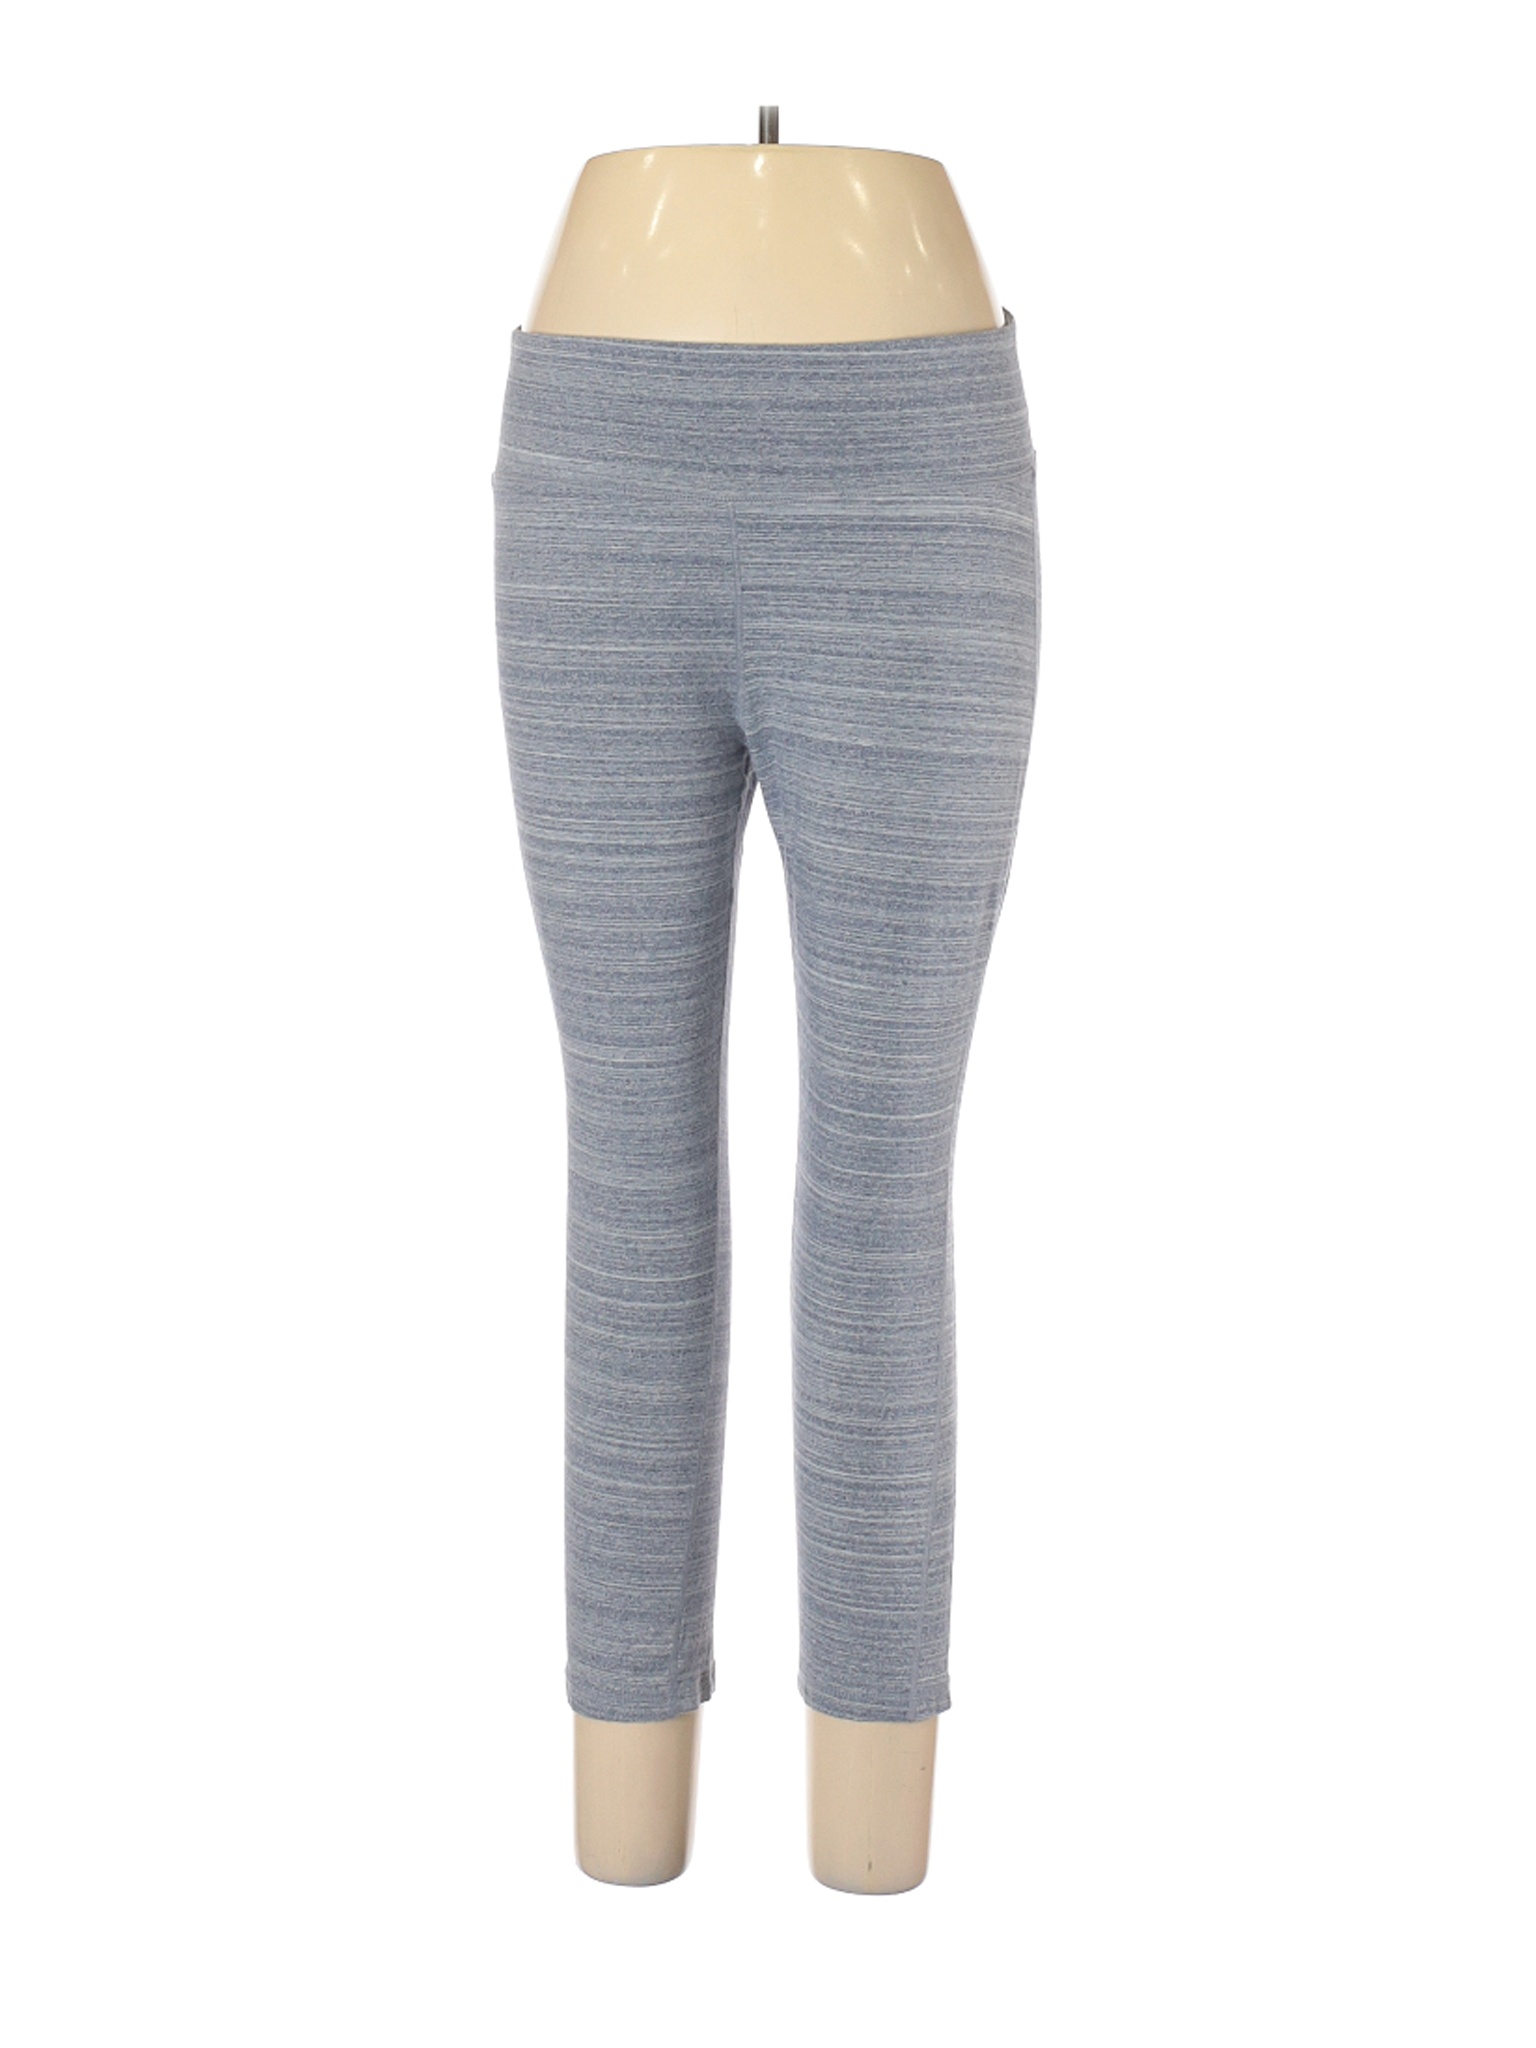 Gap Fit Women Gray Active Pants XL Tall | eBay